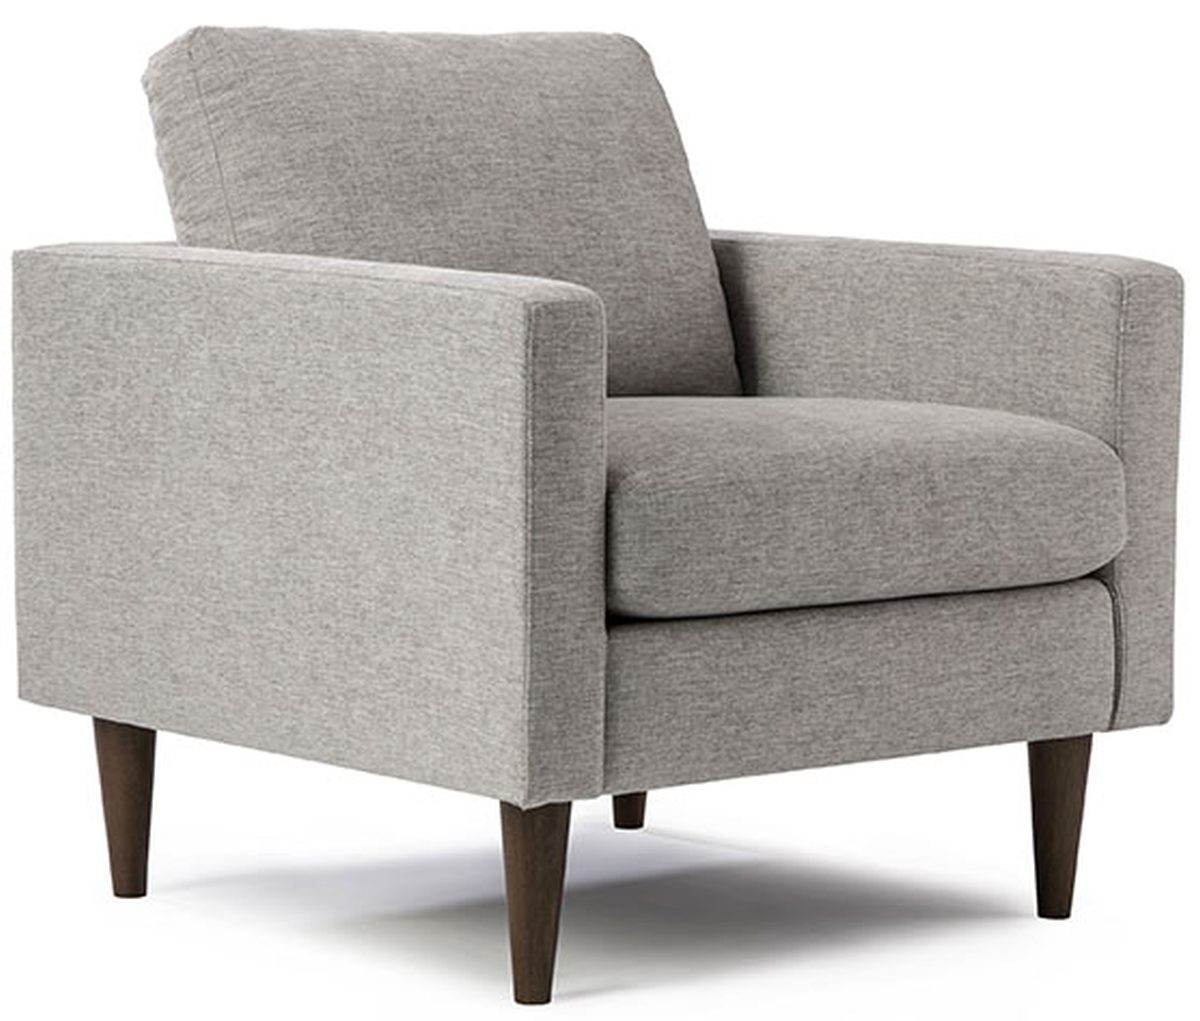 Best™ Home Furnishings Trafton Gray/Dark Walnut Chair